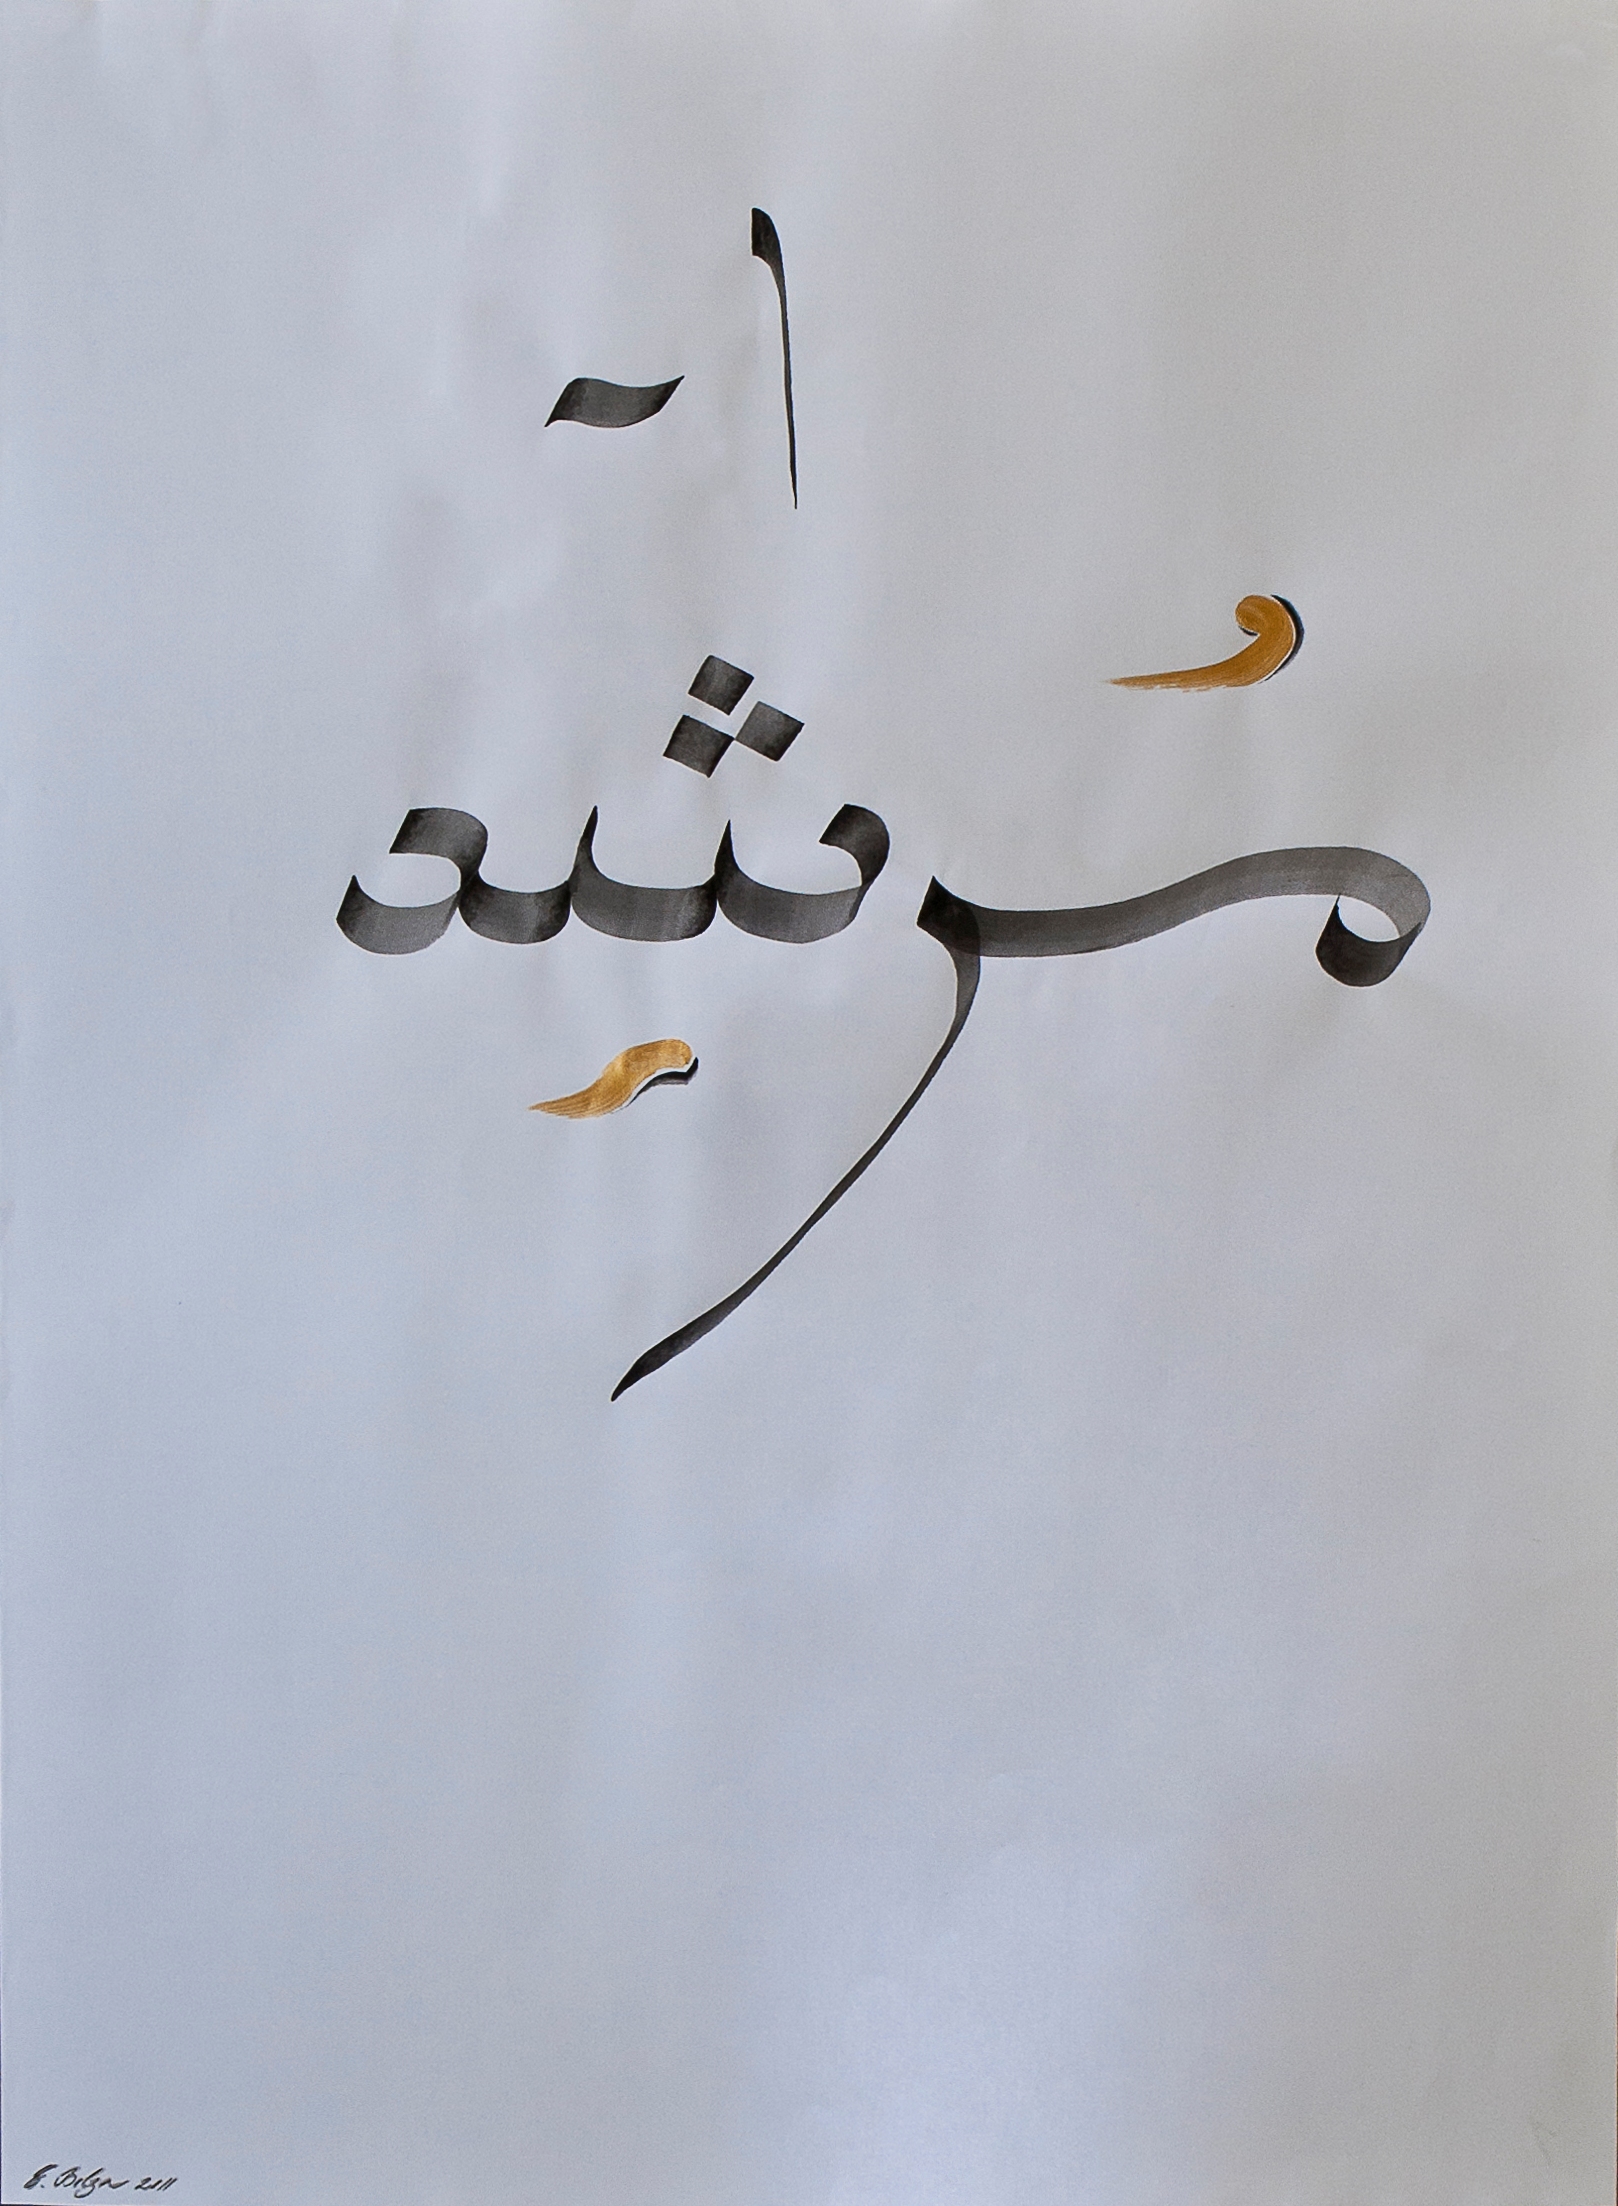    Calligraphic Installation Sheet     92 x 100 cm  